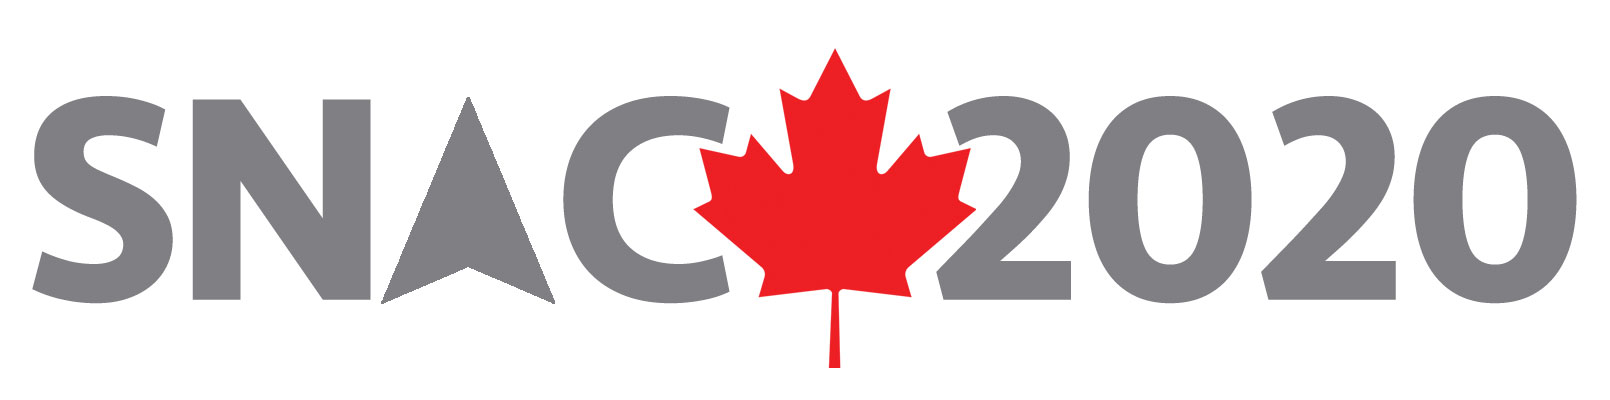 SNAC2020 logo